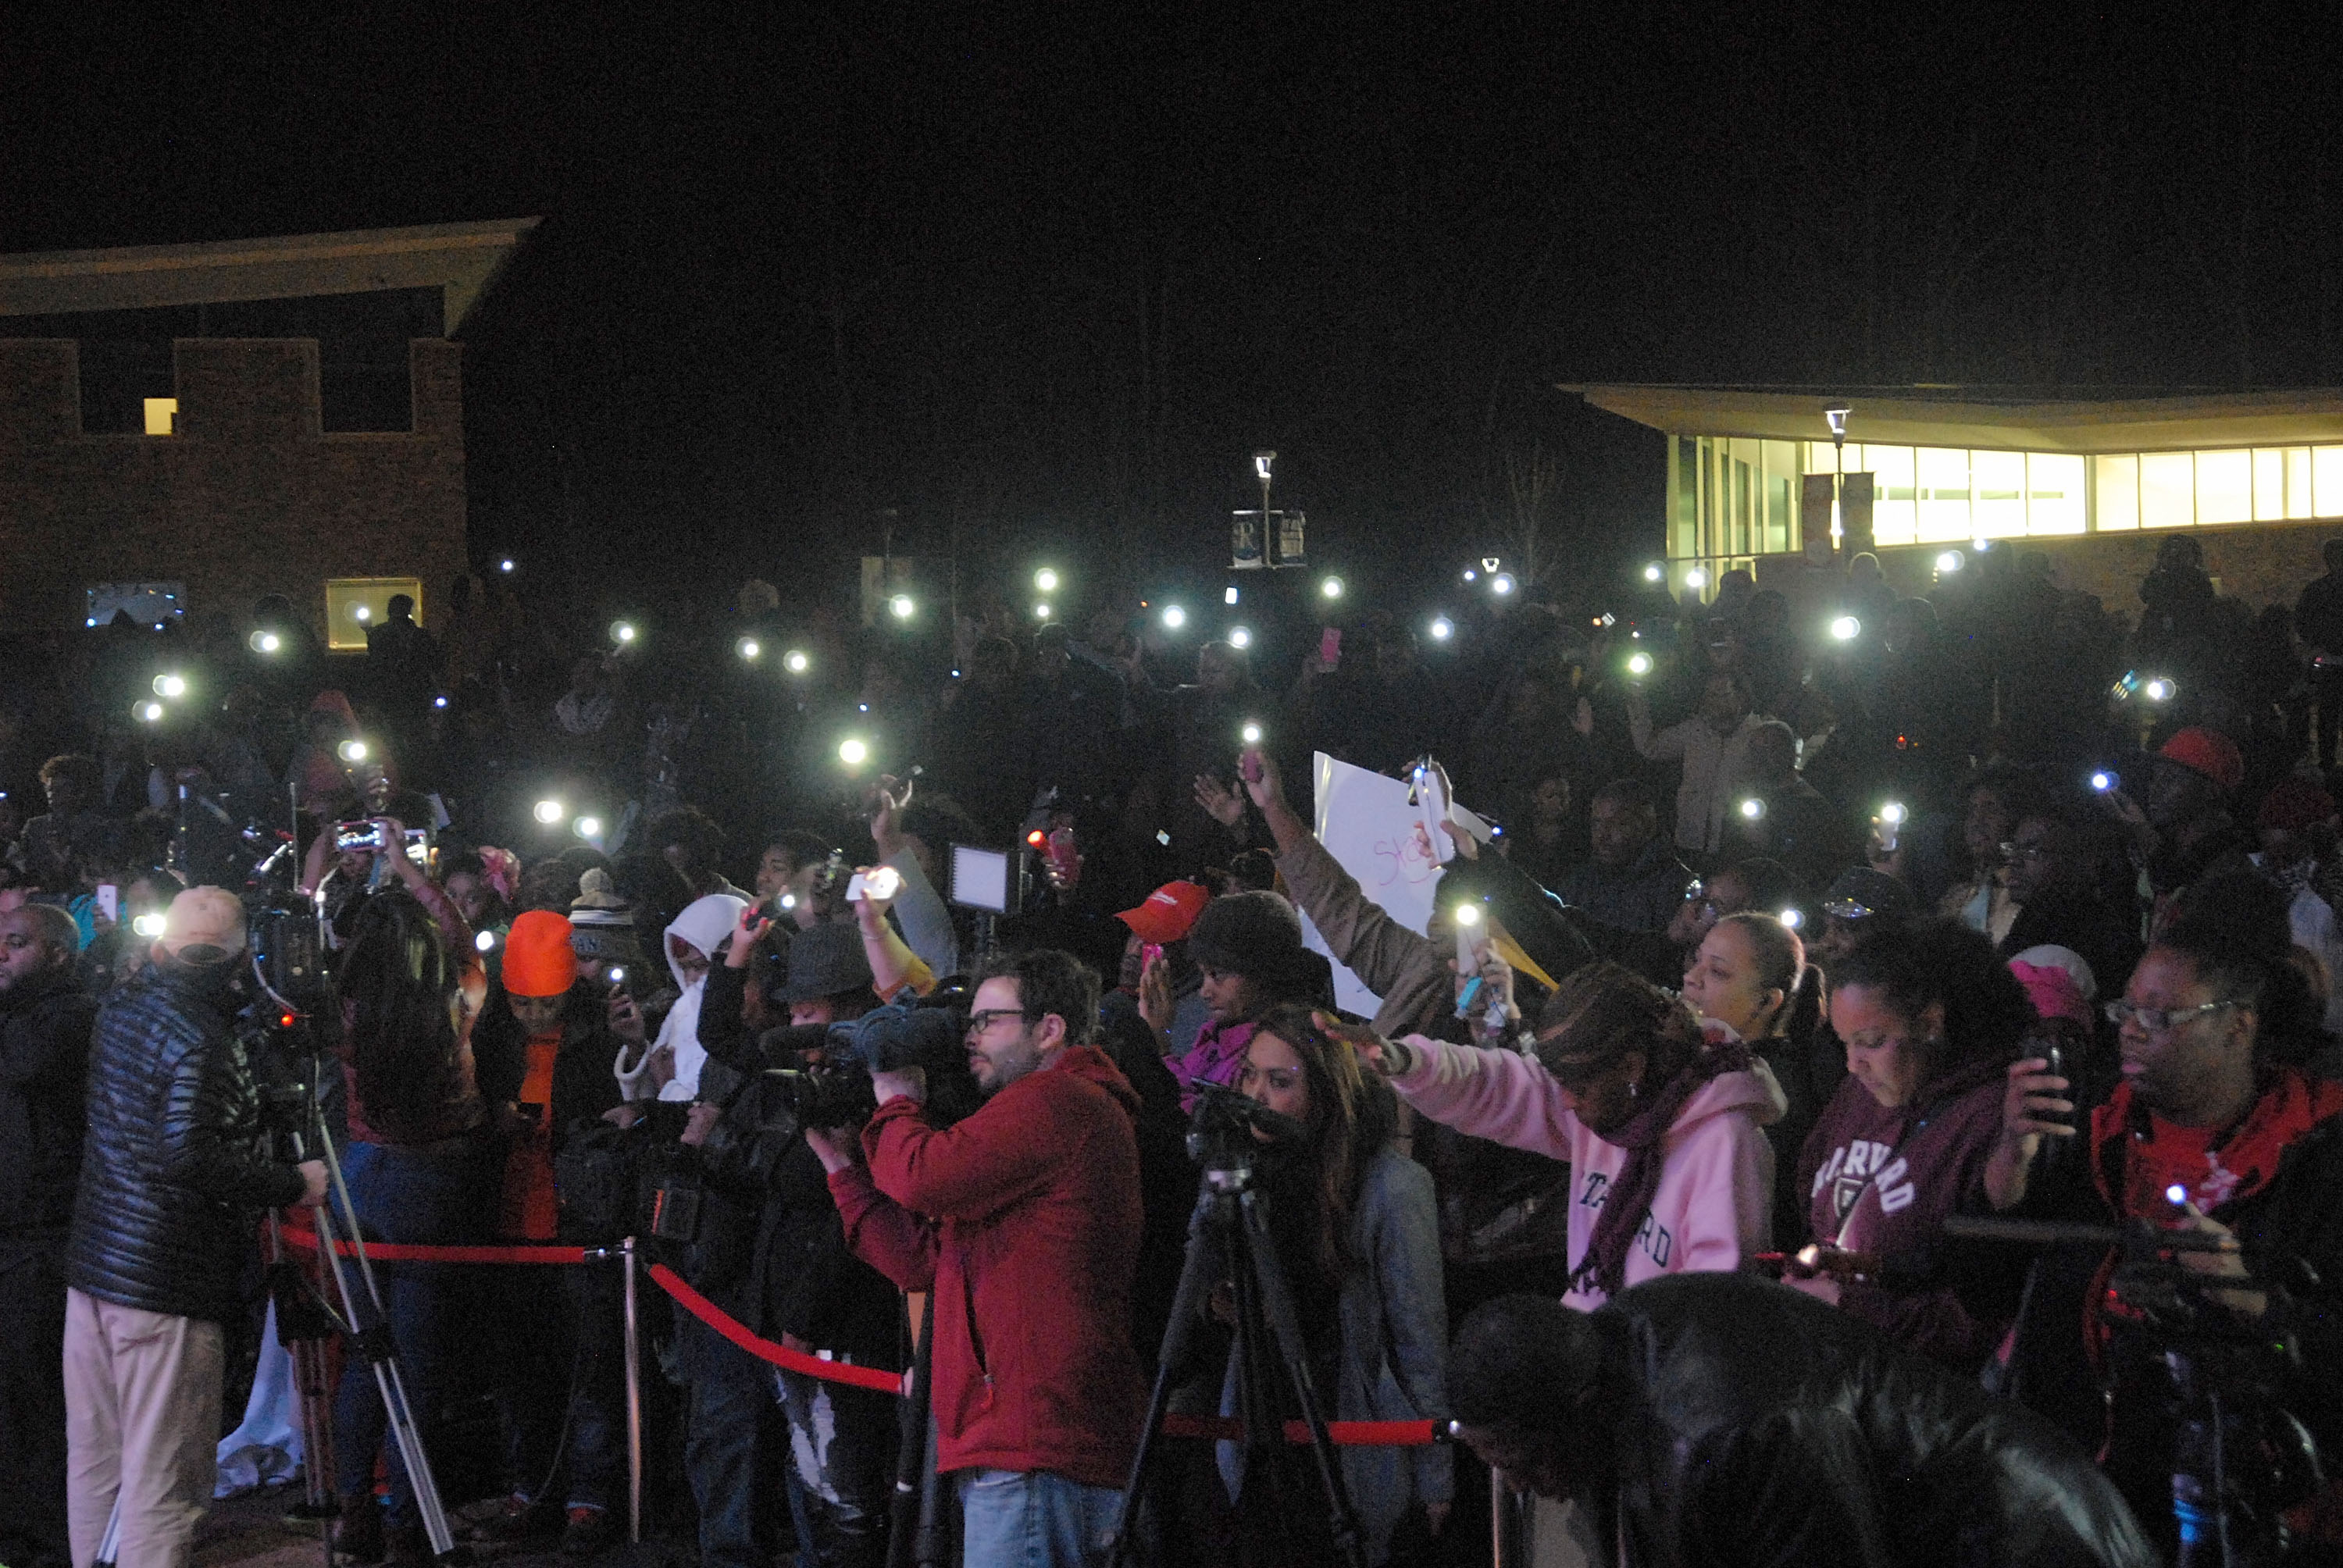 Media covering the Bobbi Kristina Brown Public Candleight Vigil on Feb. 9, 2015 in Riverdale, Georgia.